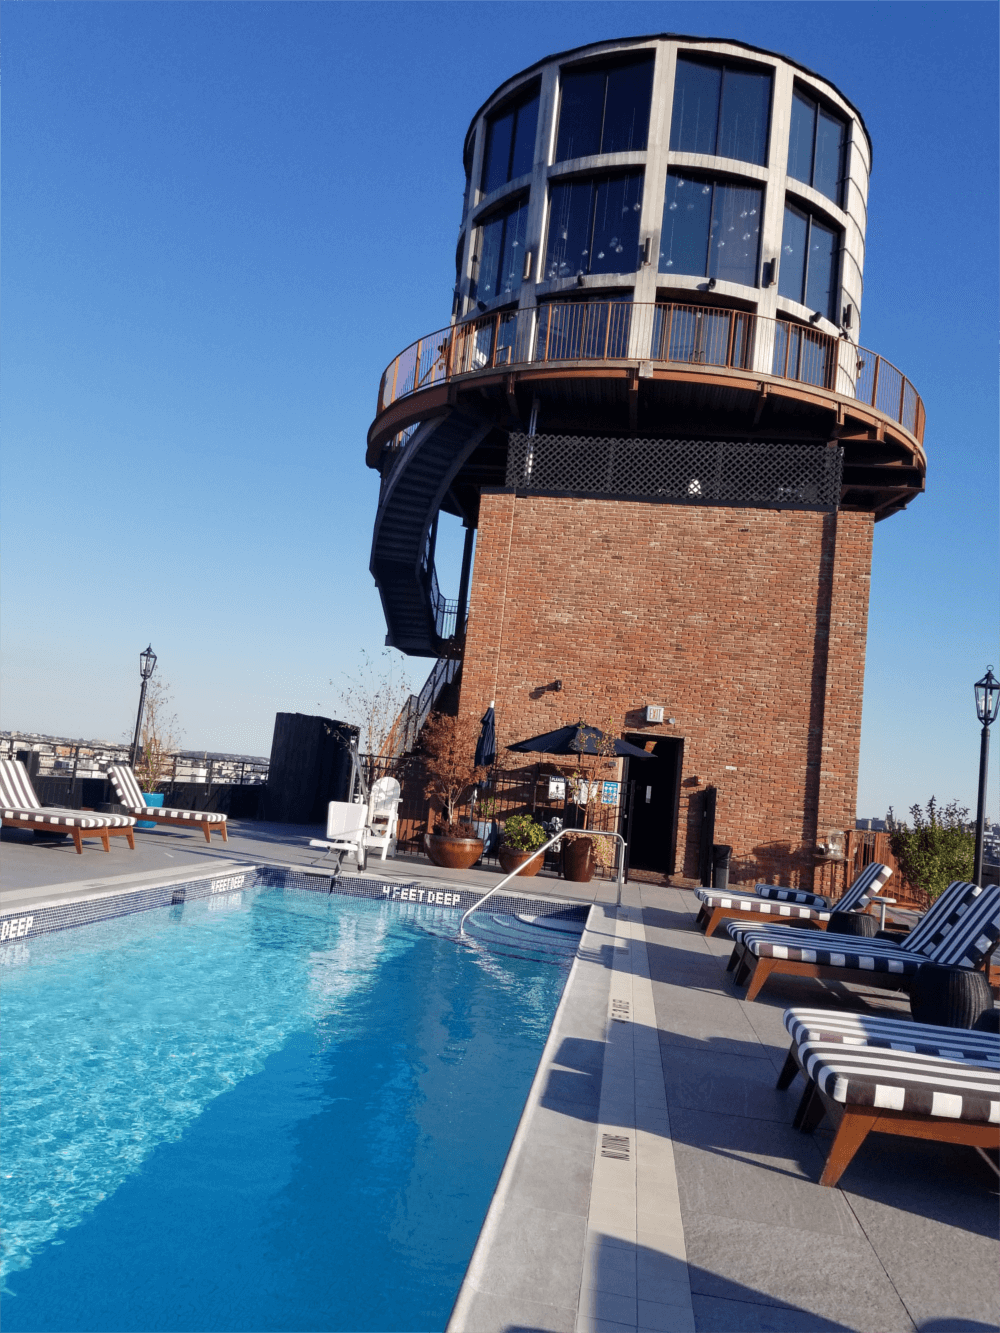 a rooftop pool in brooklyn